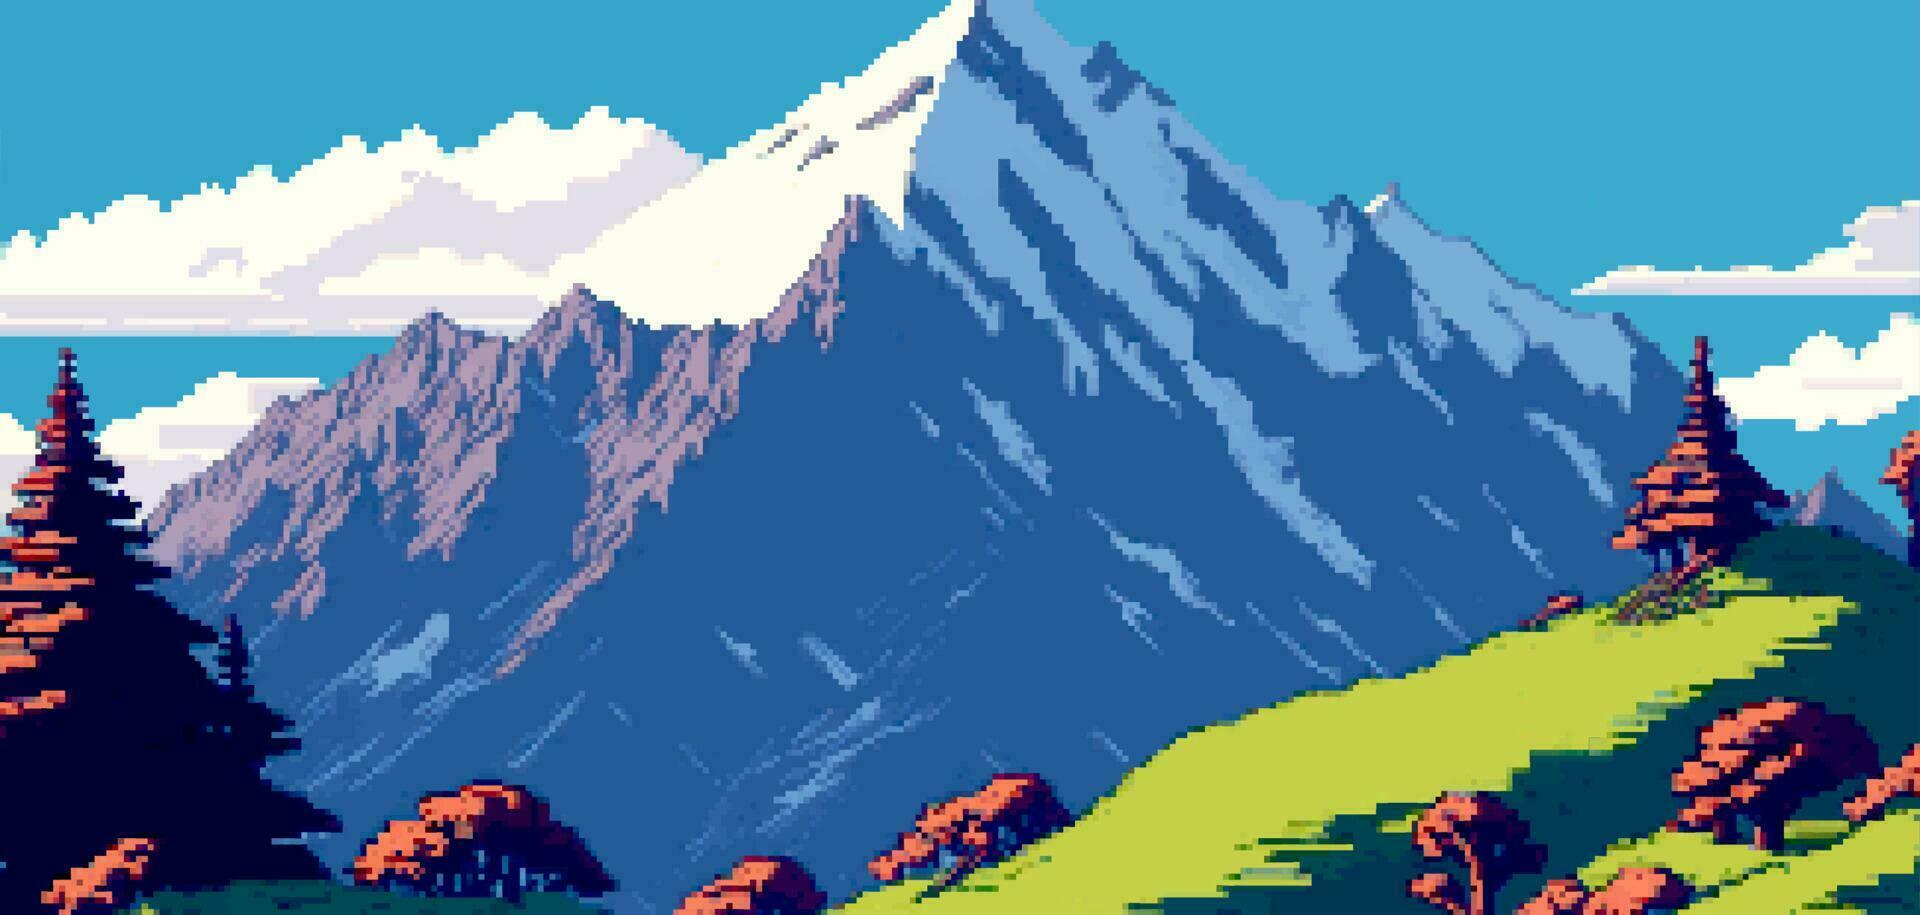 Landscape 8bit pixel art. Summer natural landscape mountain scenery arcade video game background vector